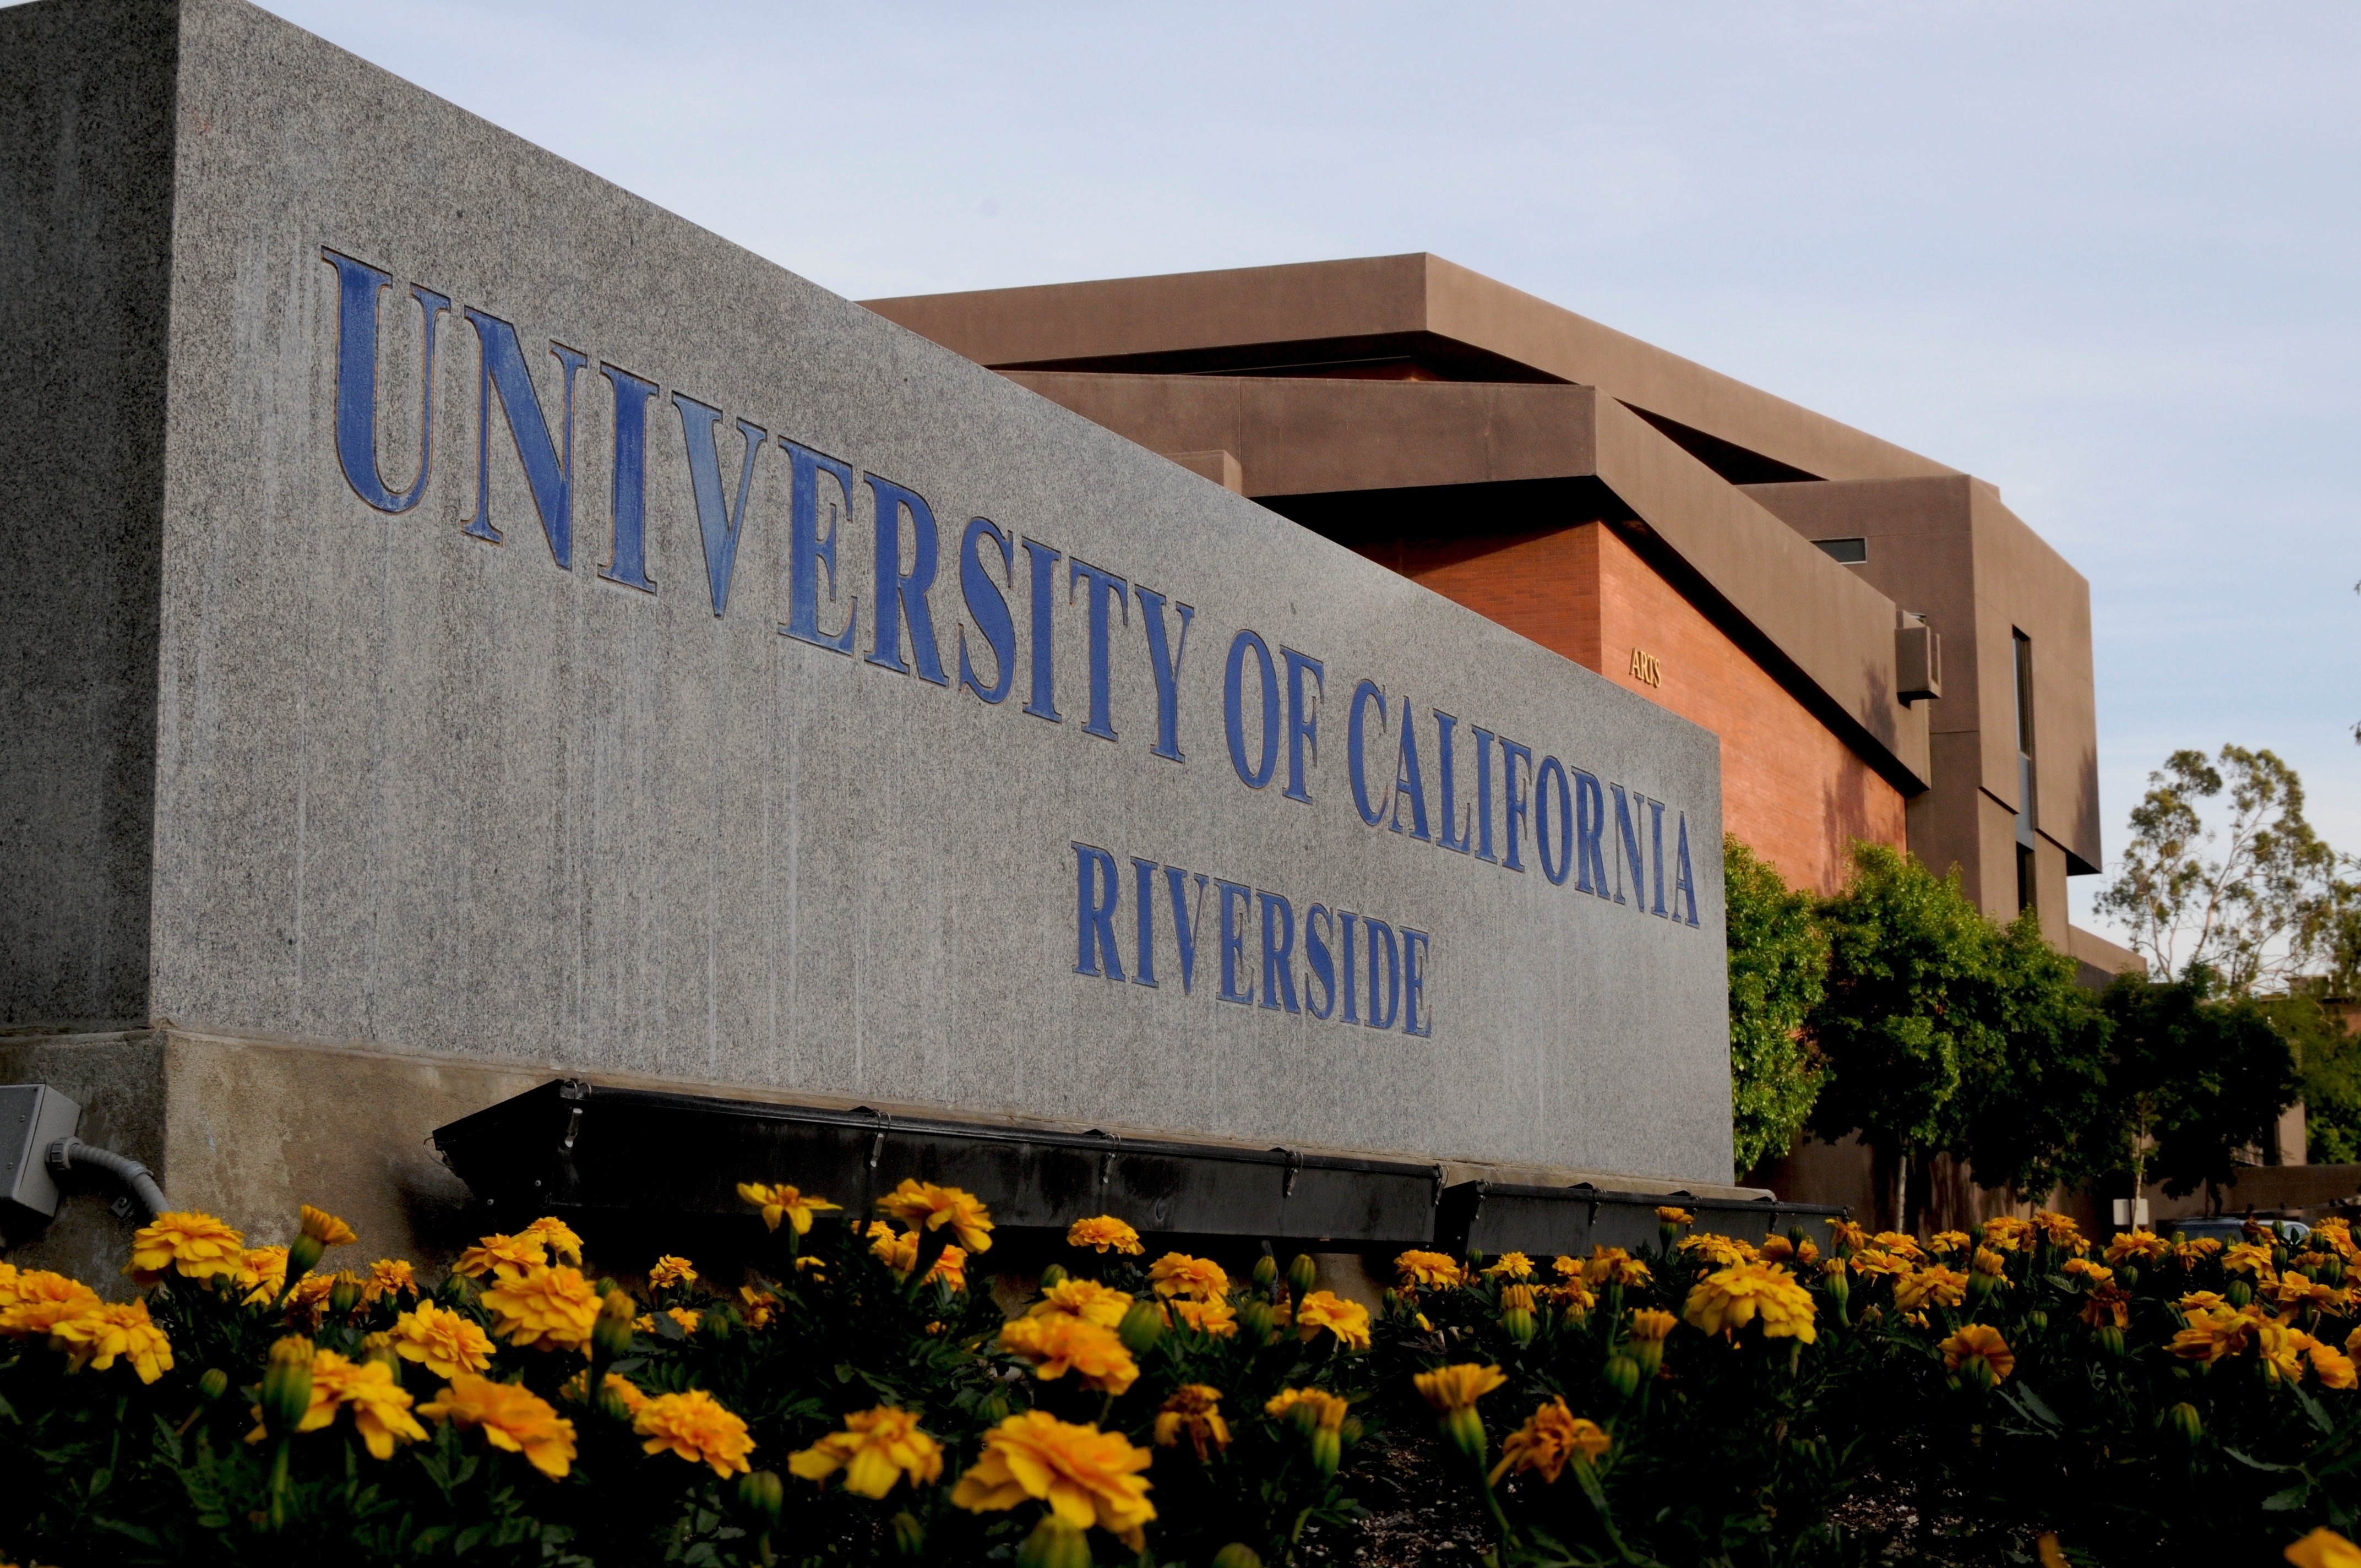 Universal university. Калифорнийский университет в Риверсайде. Университет Калифорнии в Лос-Анджелесе. Университет UCLA Лос Анджелес. Калифорнийский университет в Лос-Анджелесе кампус.